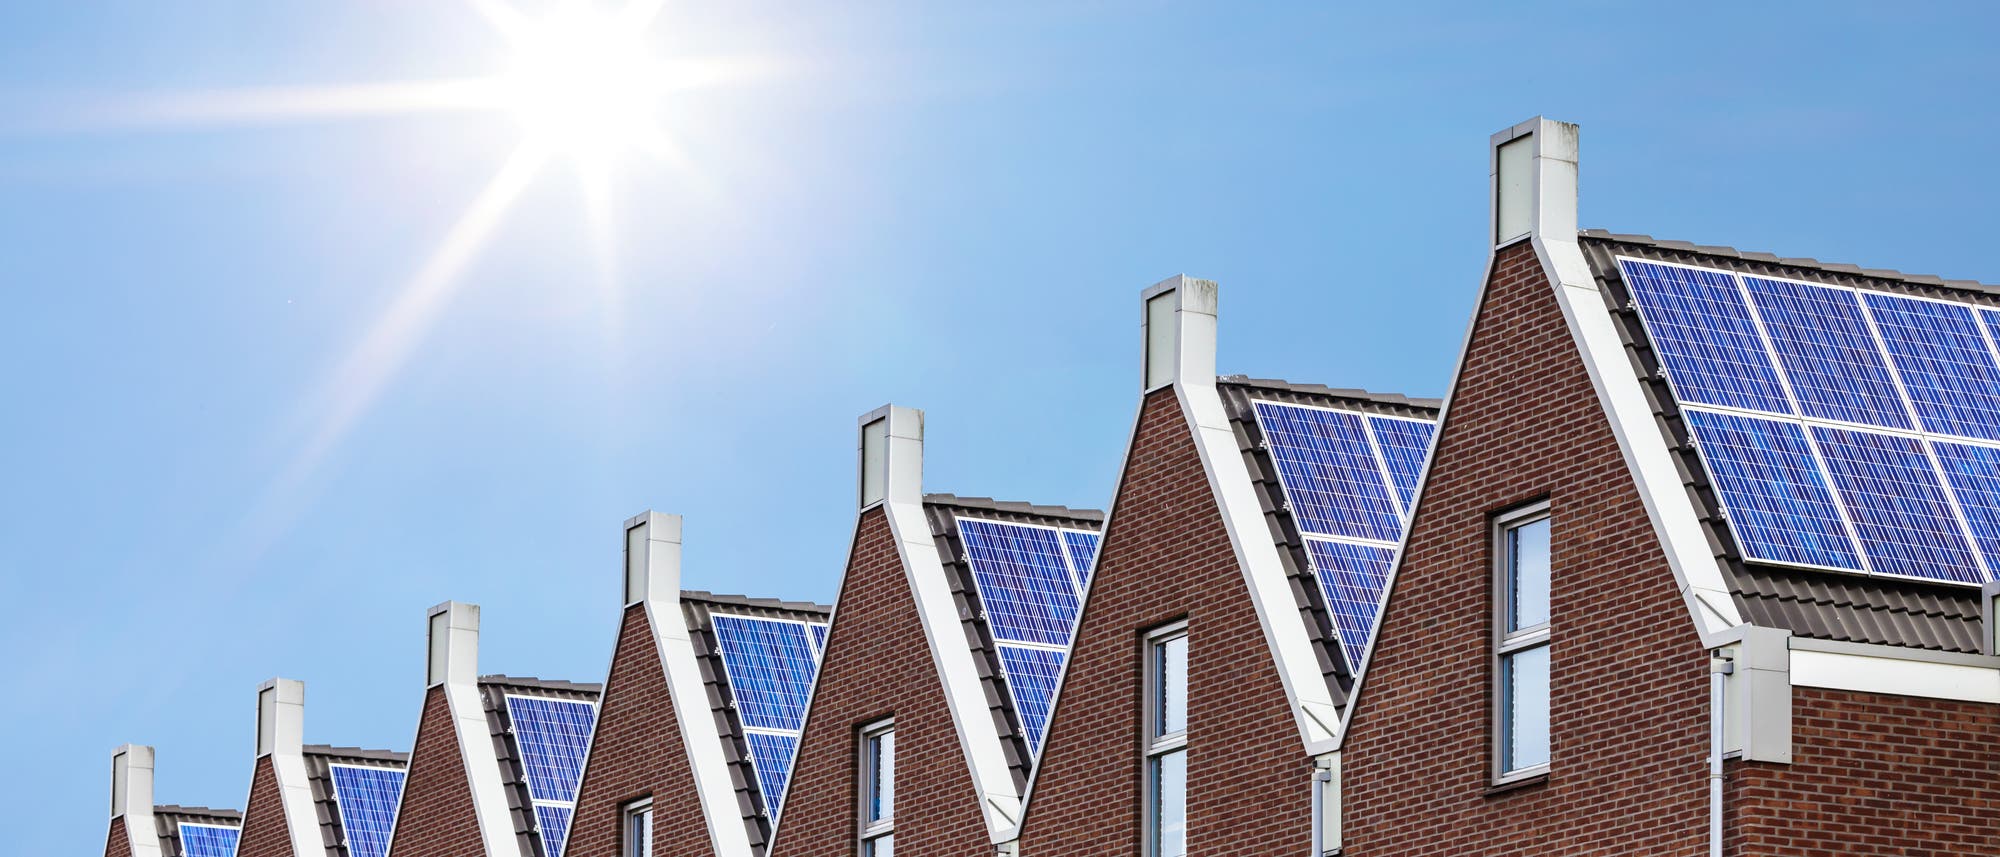 Häuserreihe mit Sonnenkollektoren